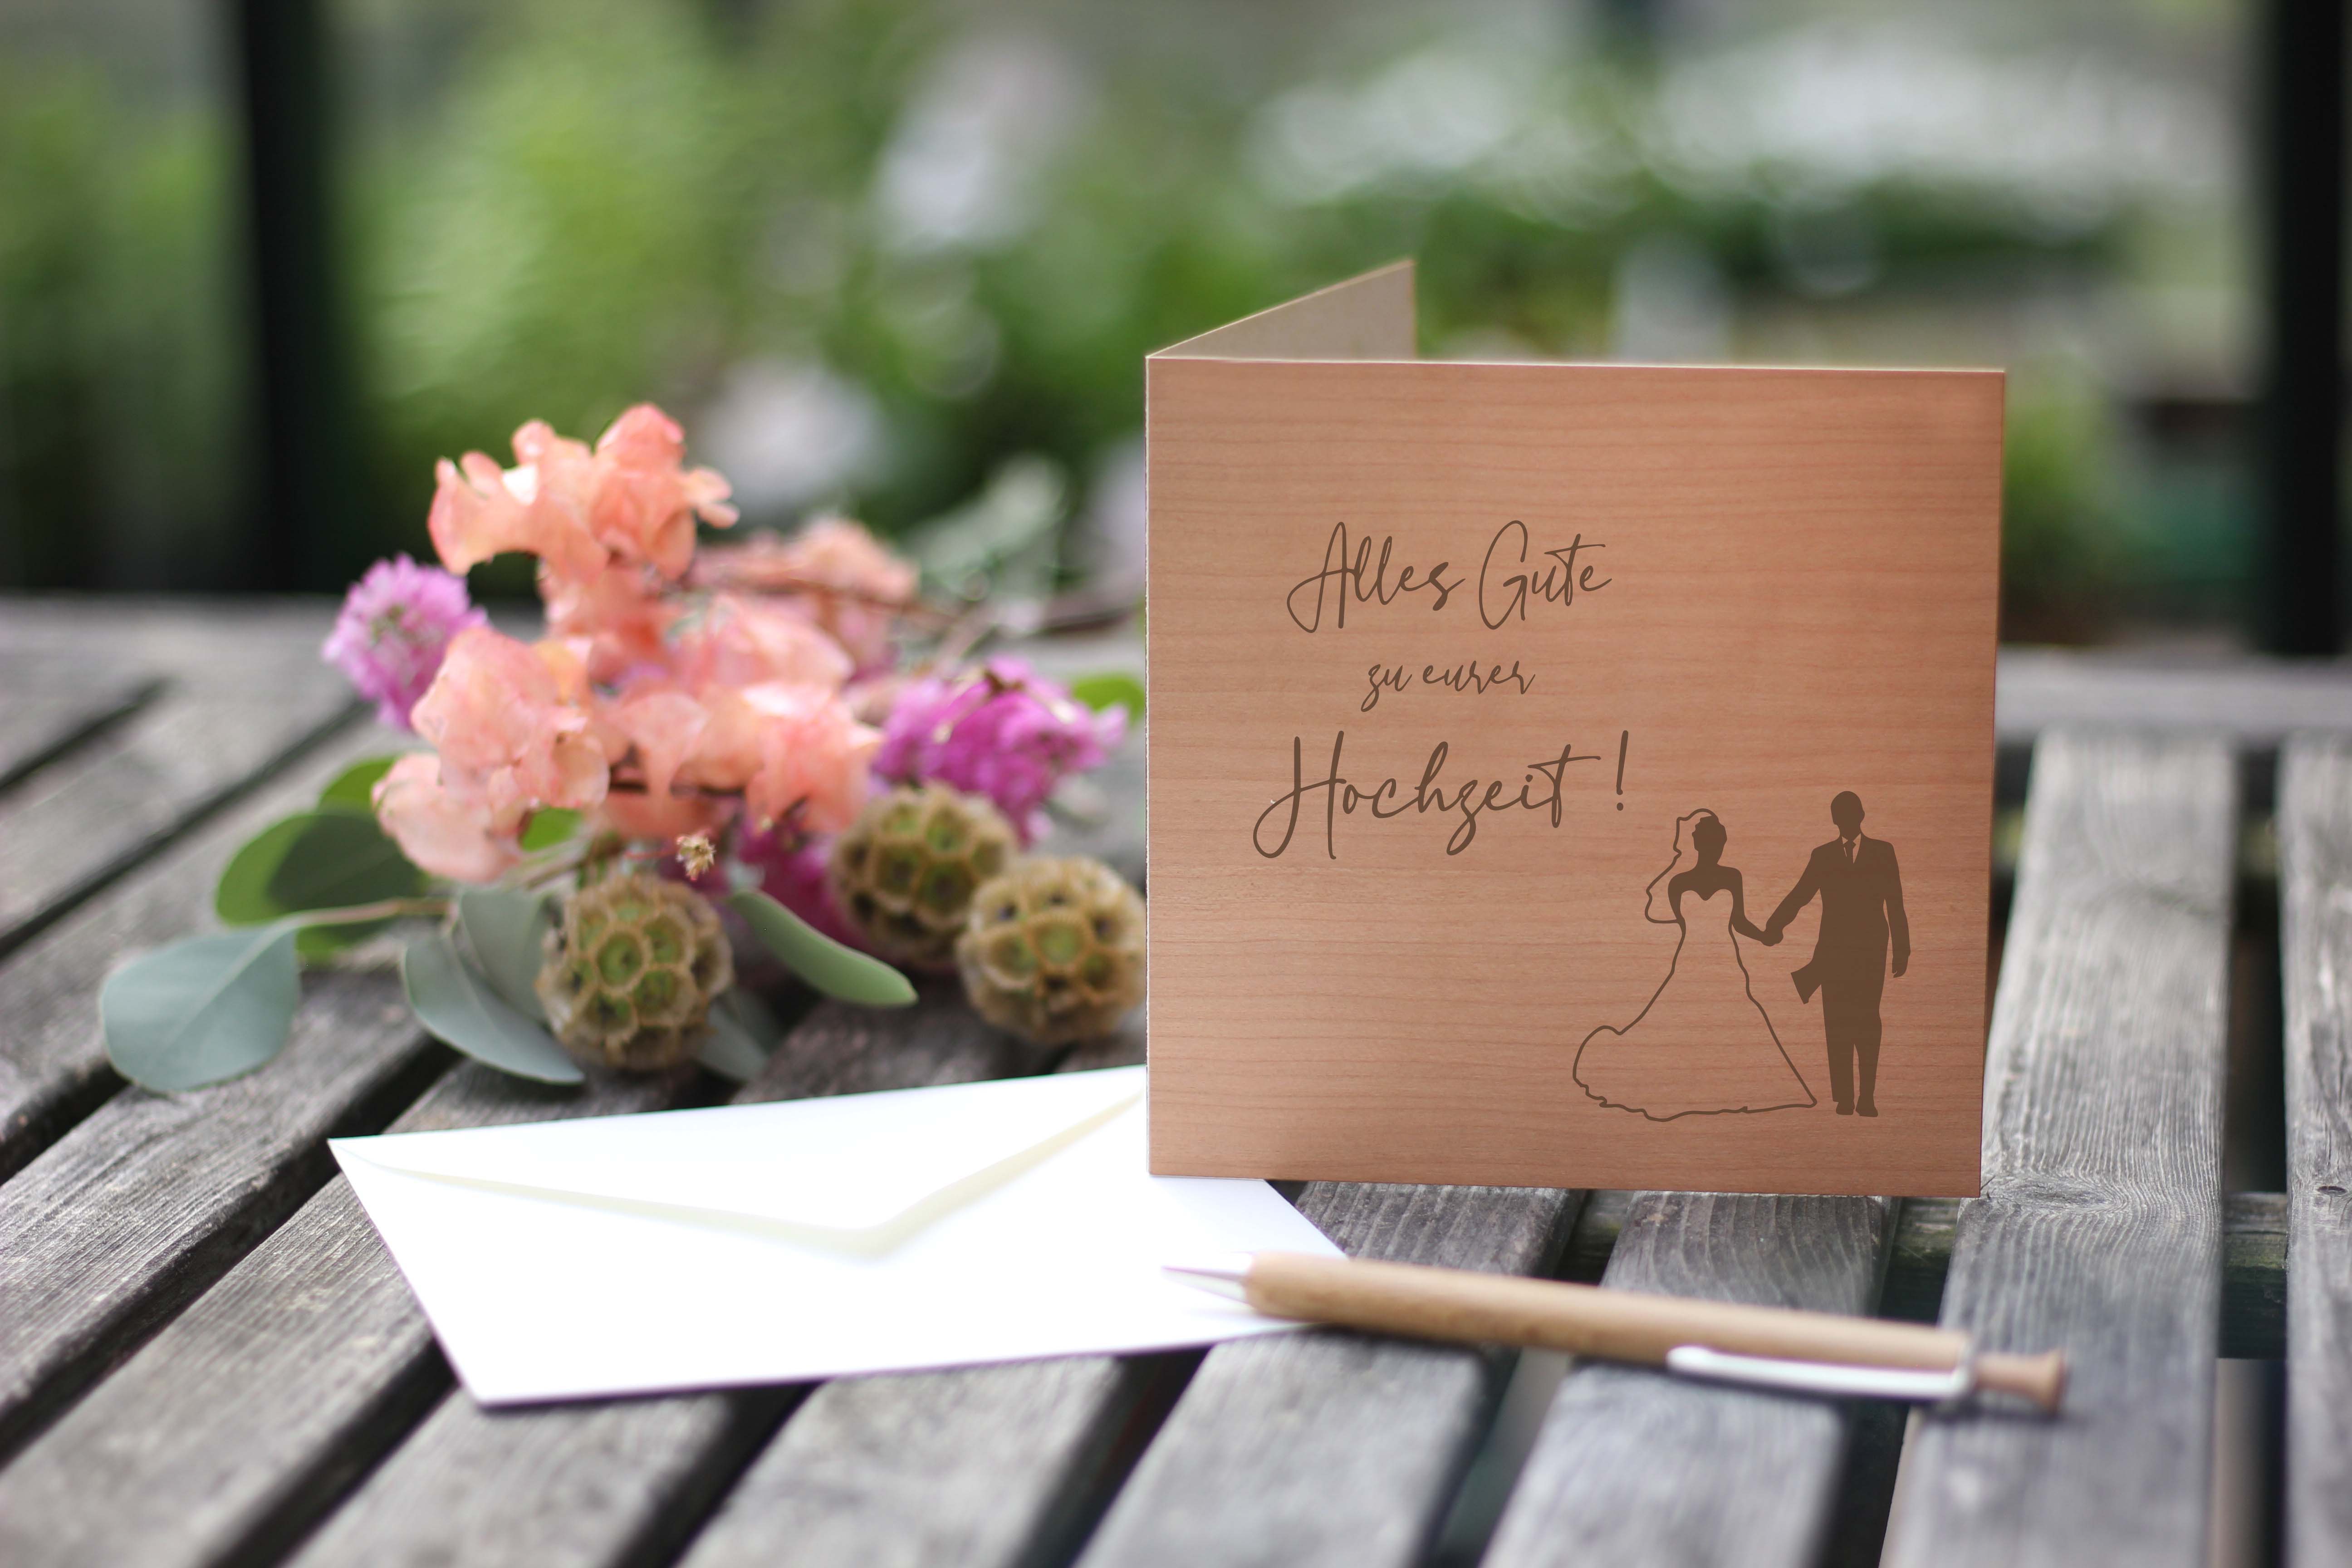 Holzgrusskarten - Holzgrusskarte Hochzeit "Alles Gute zu eurer Hochzeit!", Brautpaar, Kirsche